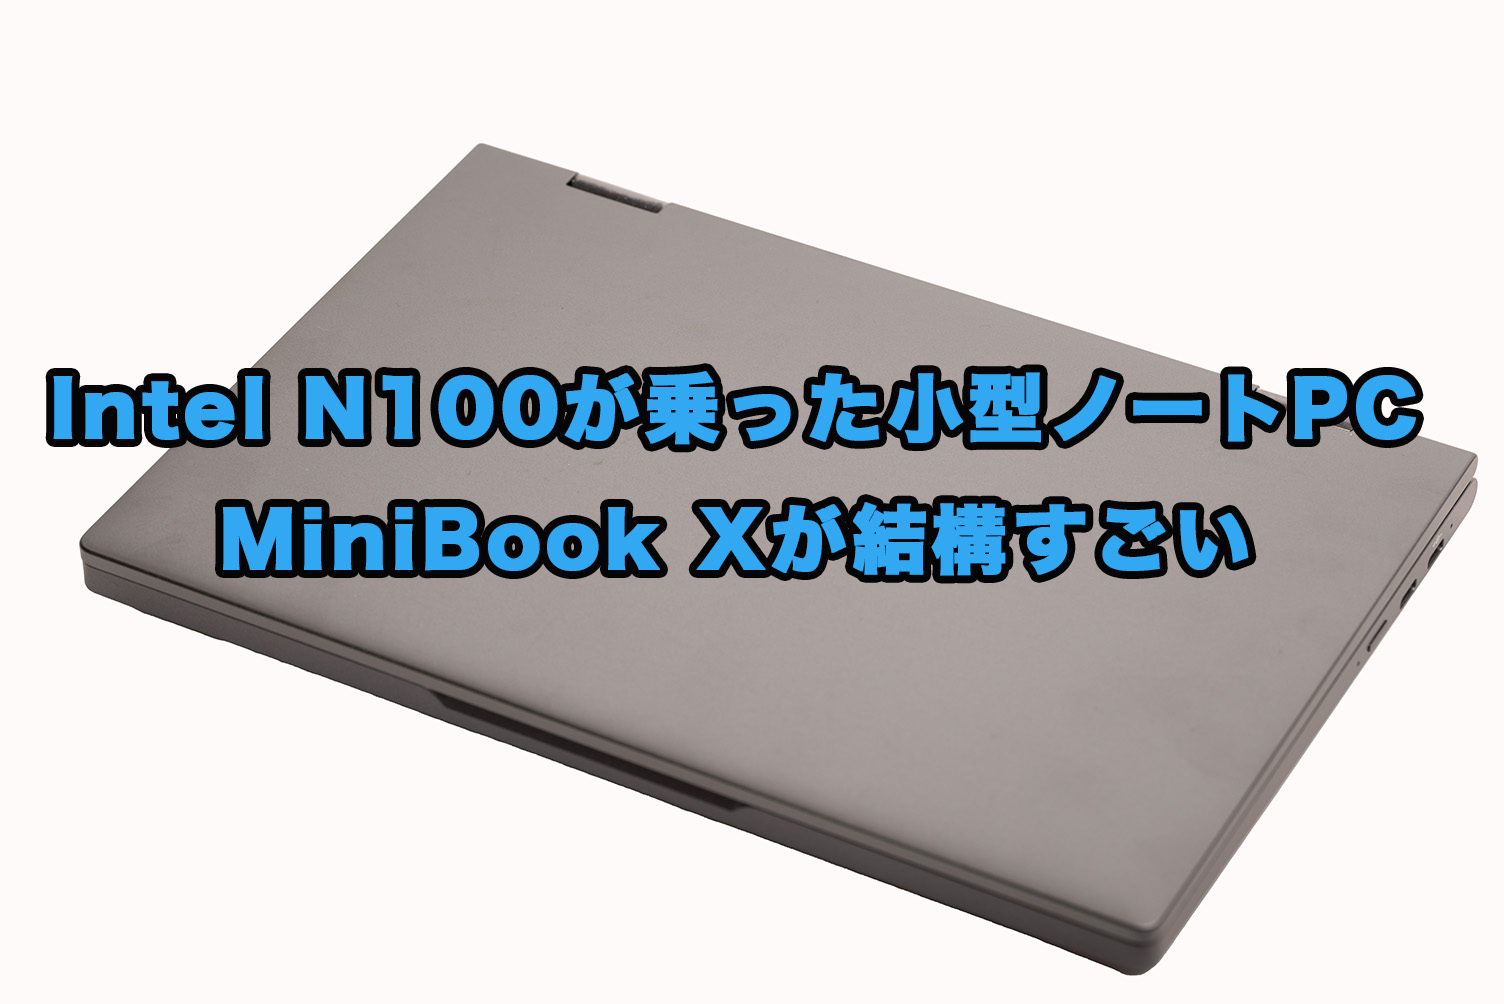 Intel N100が乗った小型ノートPC、MiniBook Xが結構すごい